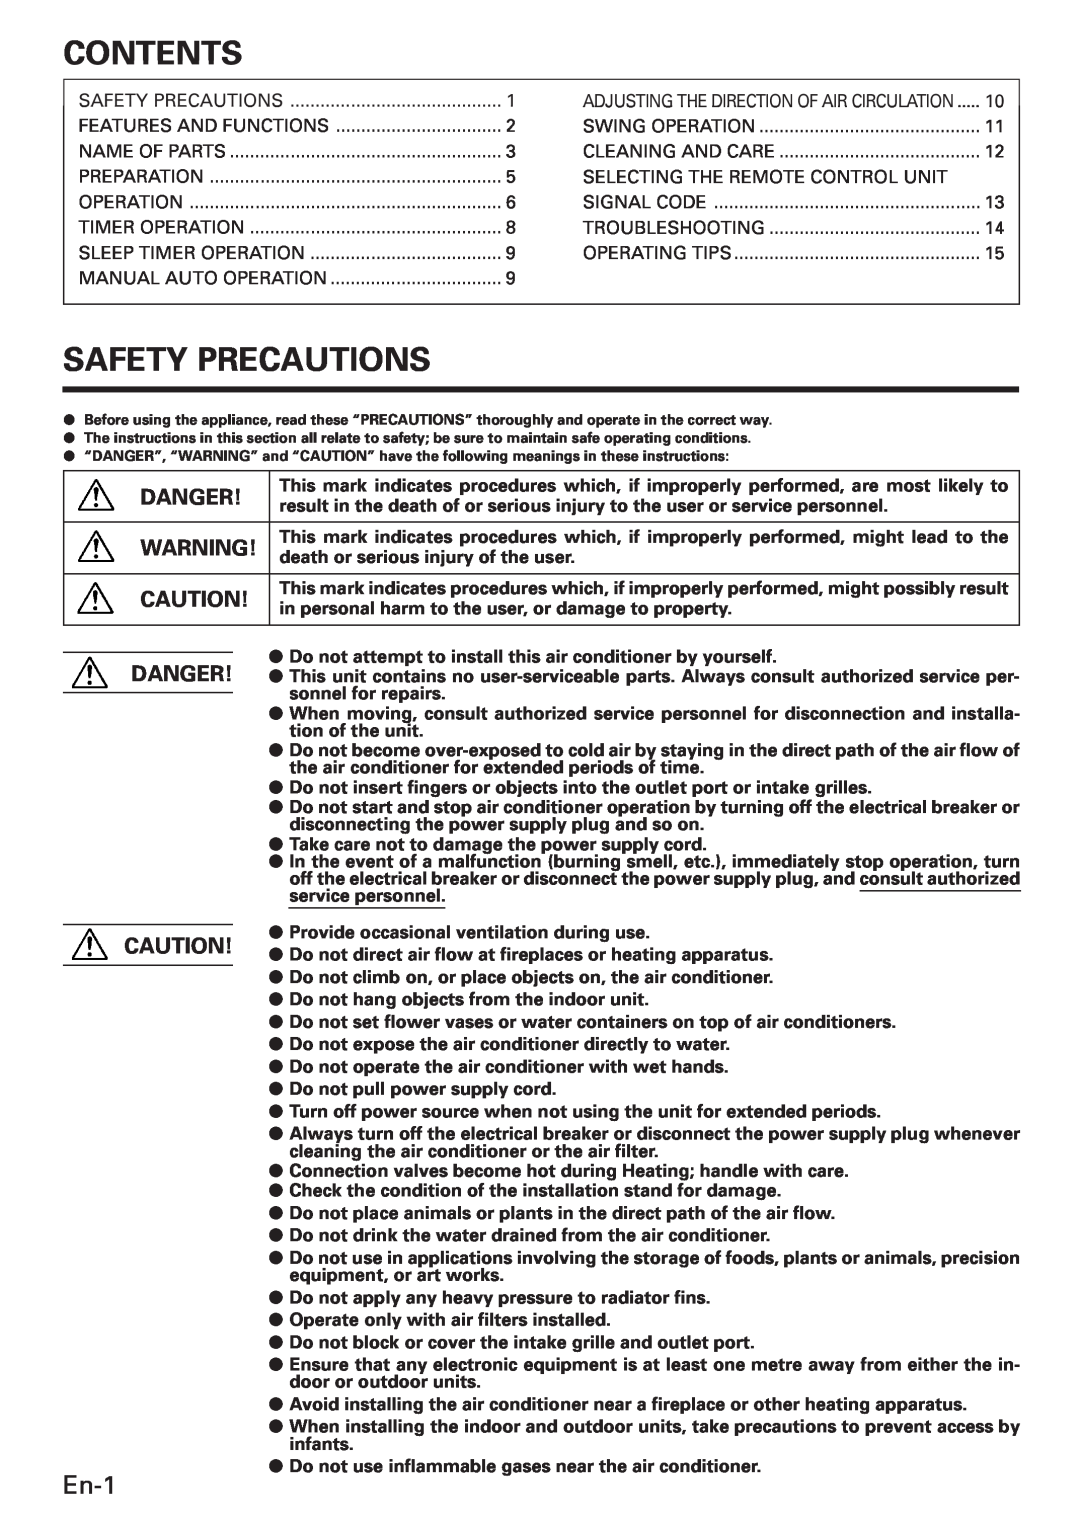 Fujitsu AWU36CX manual Contents, Safety Precautions, En-1, Danger 